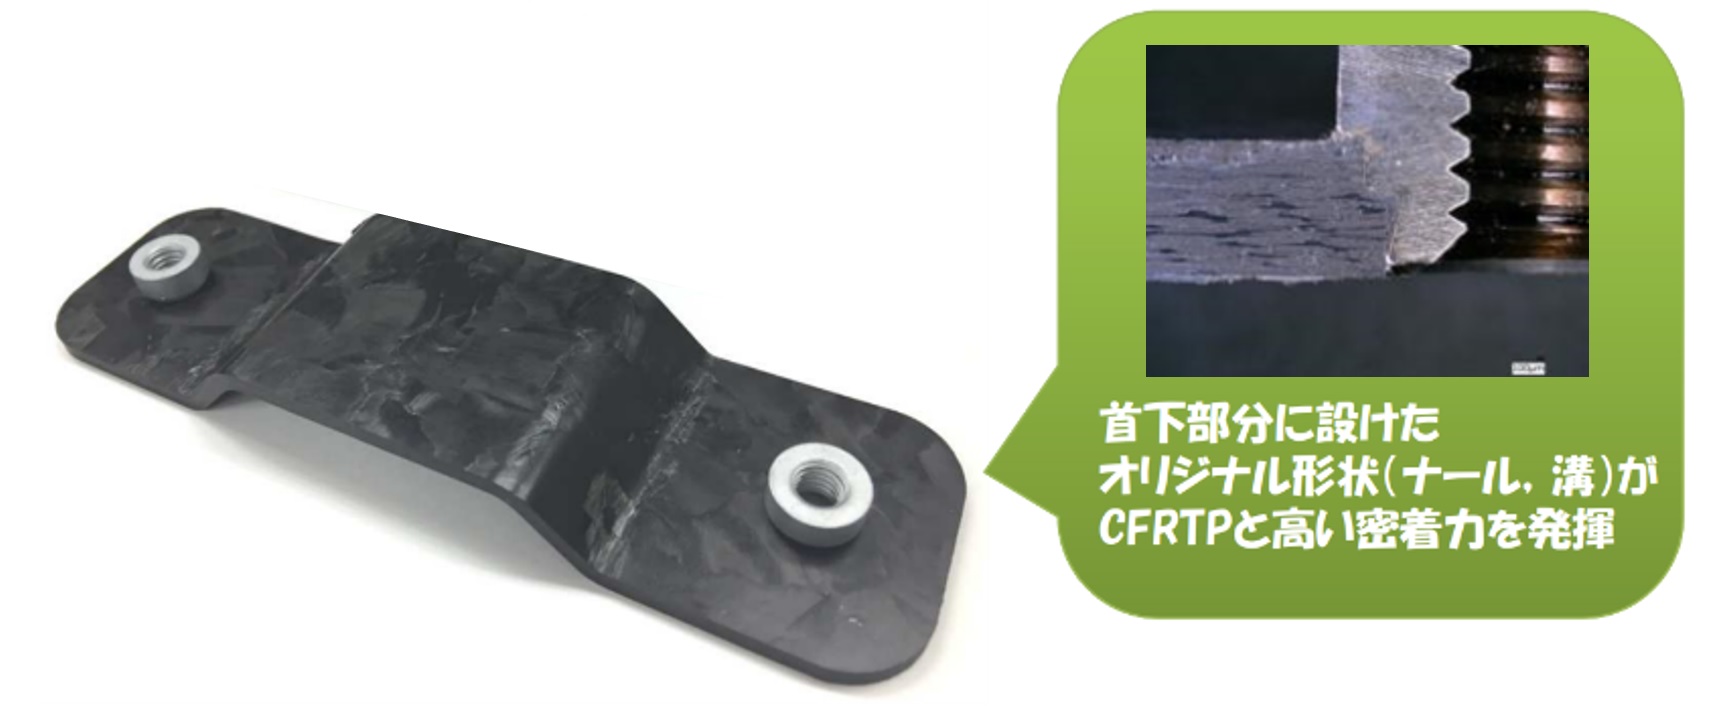 1411 01 CFRTP（炭素繊維強化熱可塑性樹脂）ファスナーとは－  高張力鋼板に取り付け可能なカシメナット